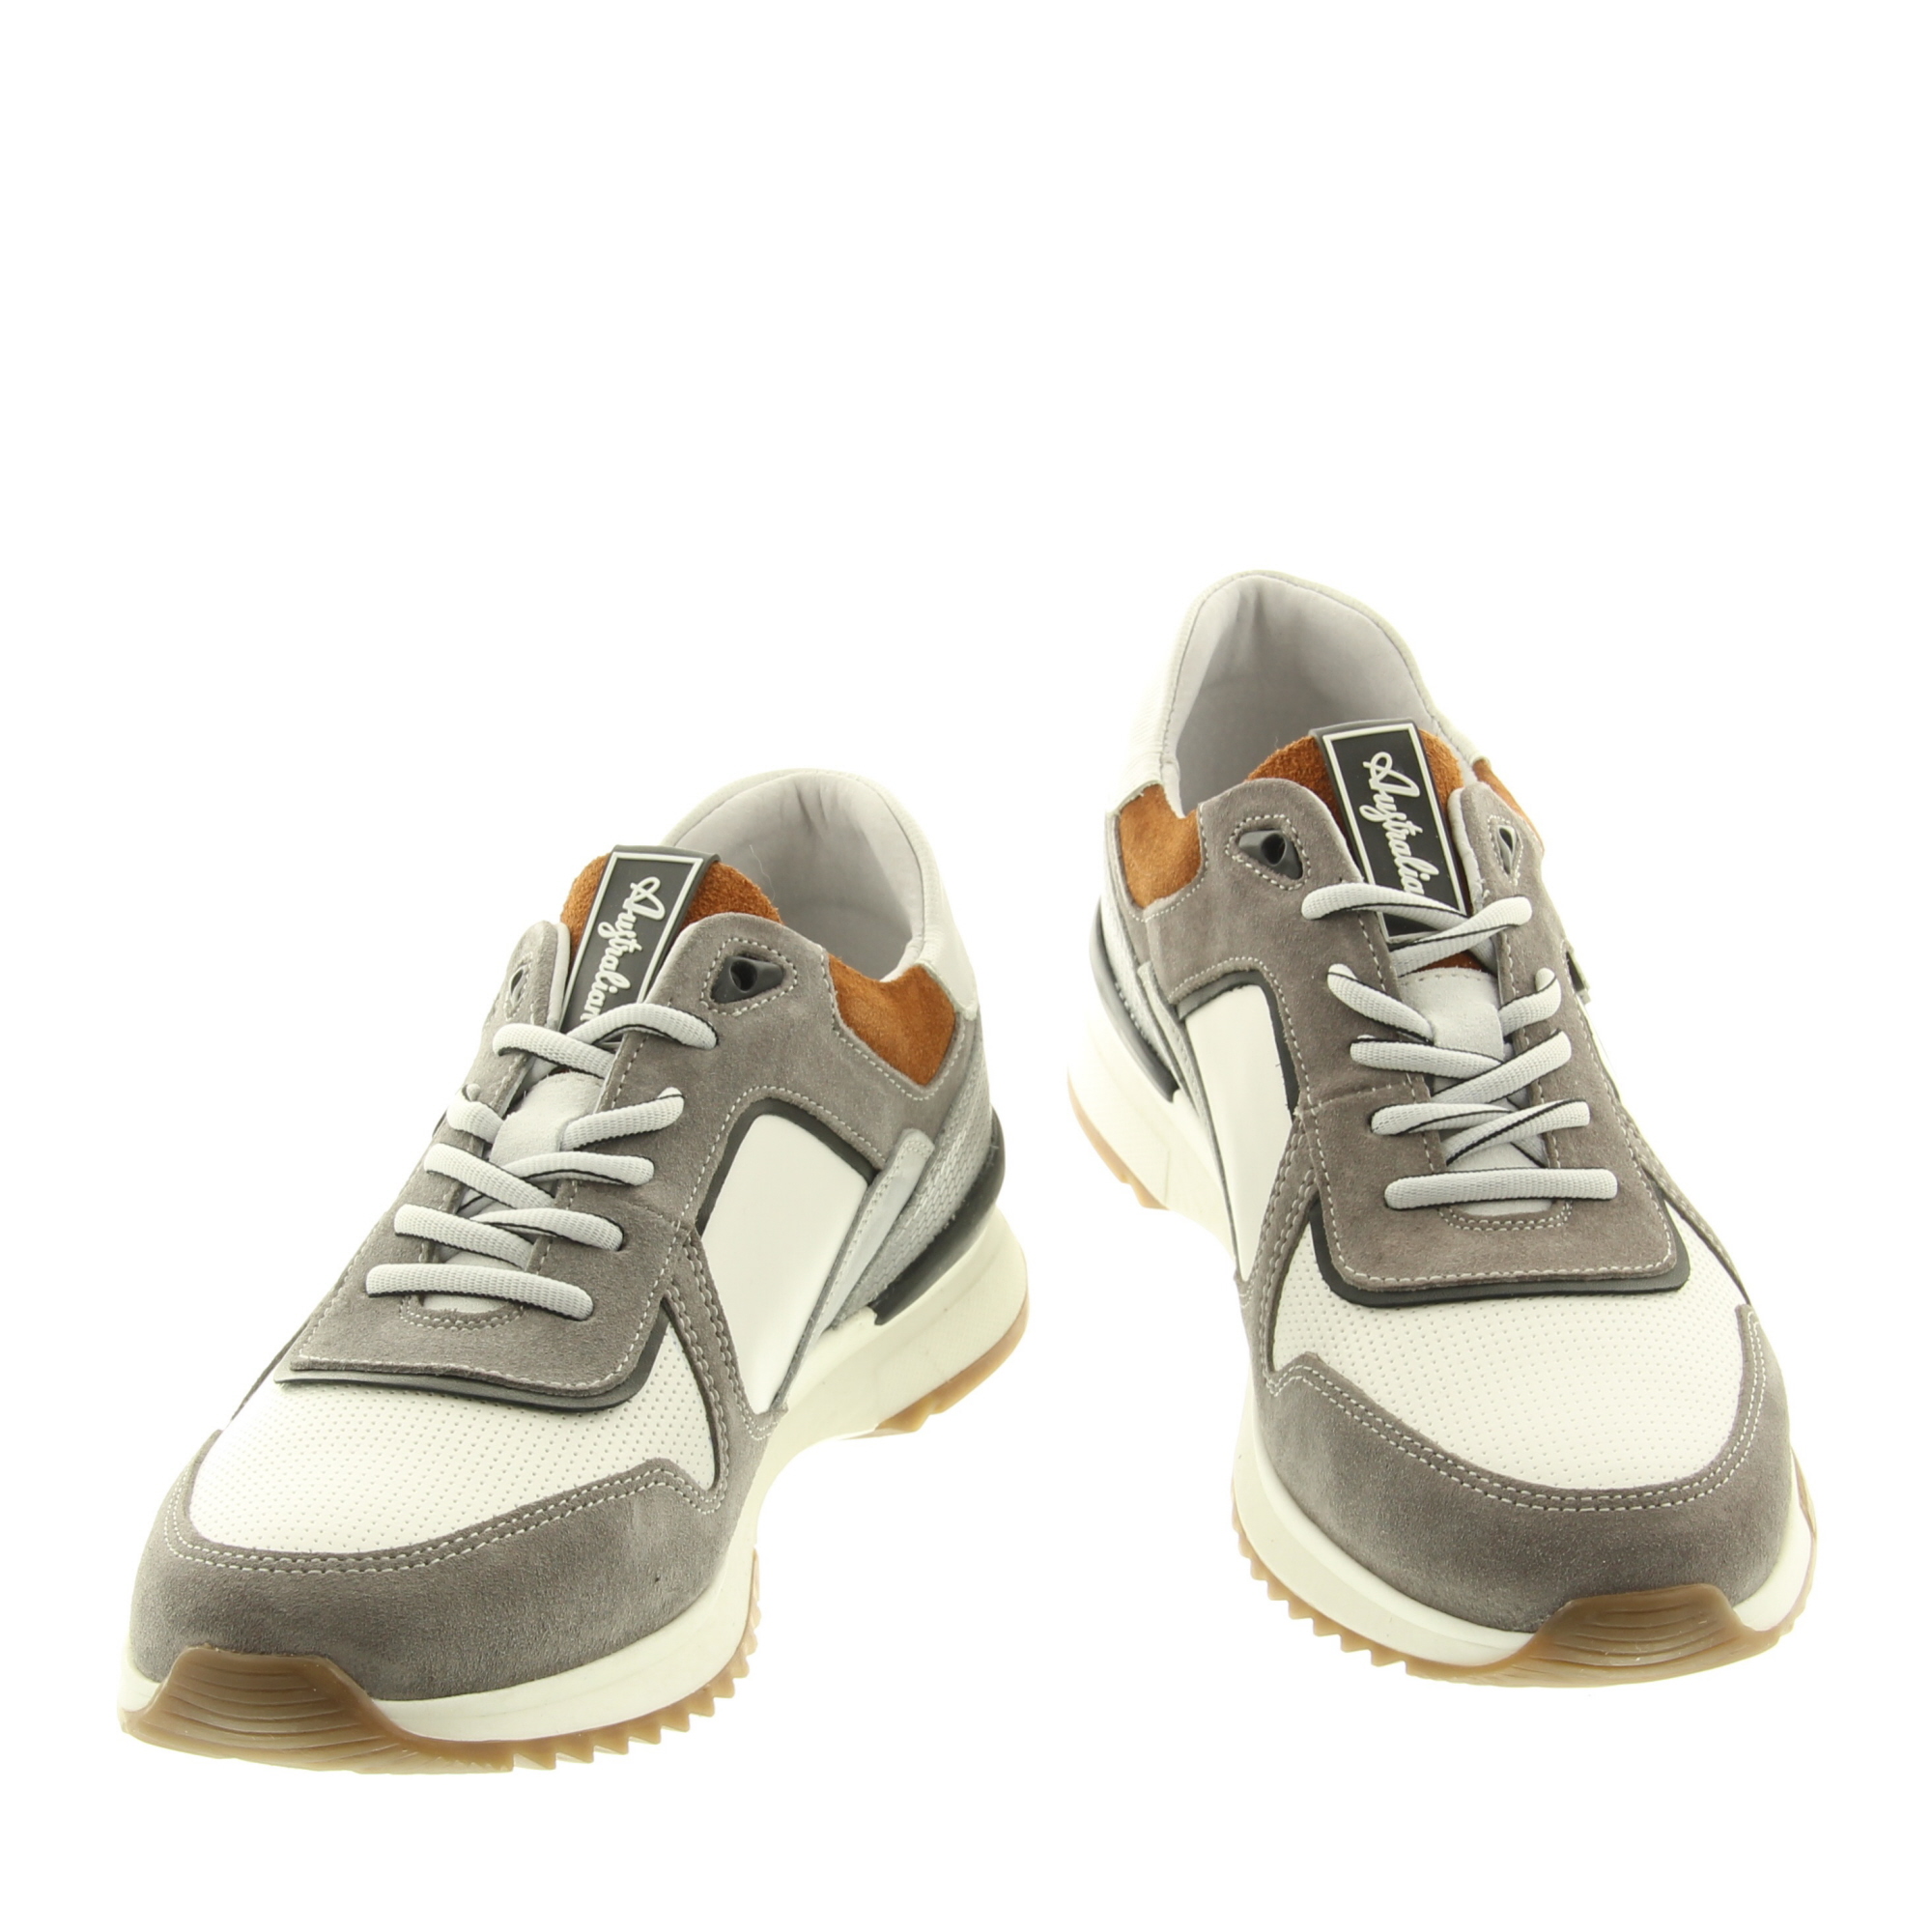 Australian Footwear Frederico 15.1543.03 KG6 Grey White Brick